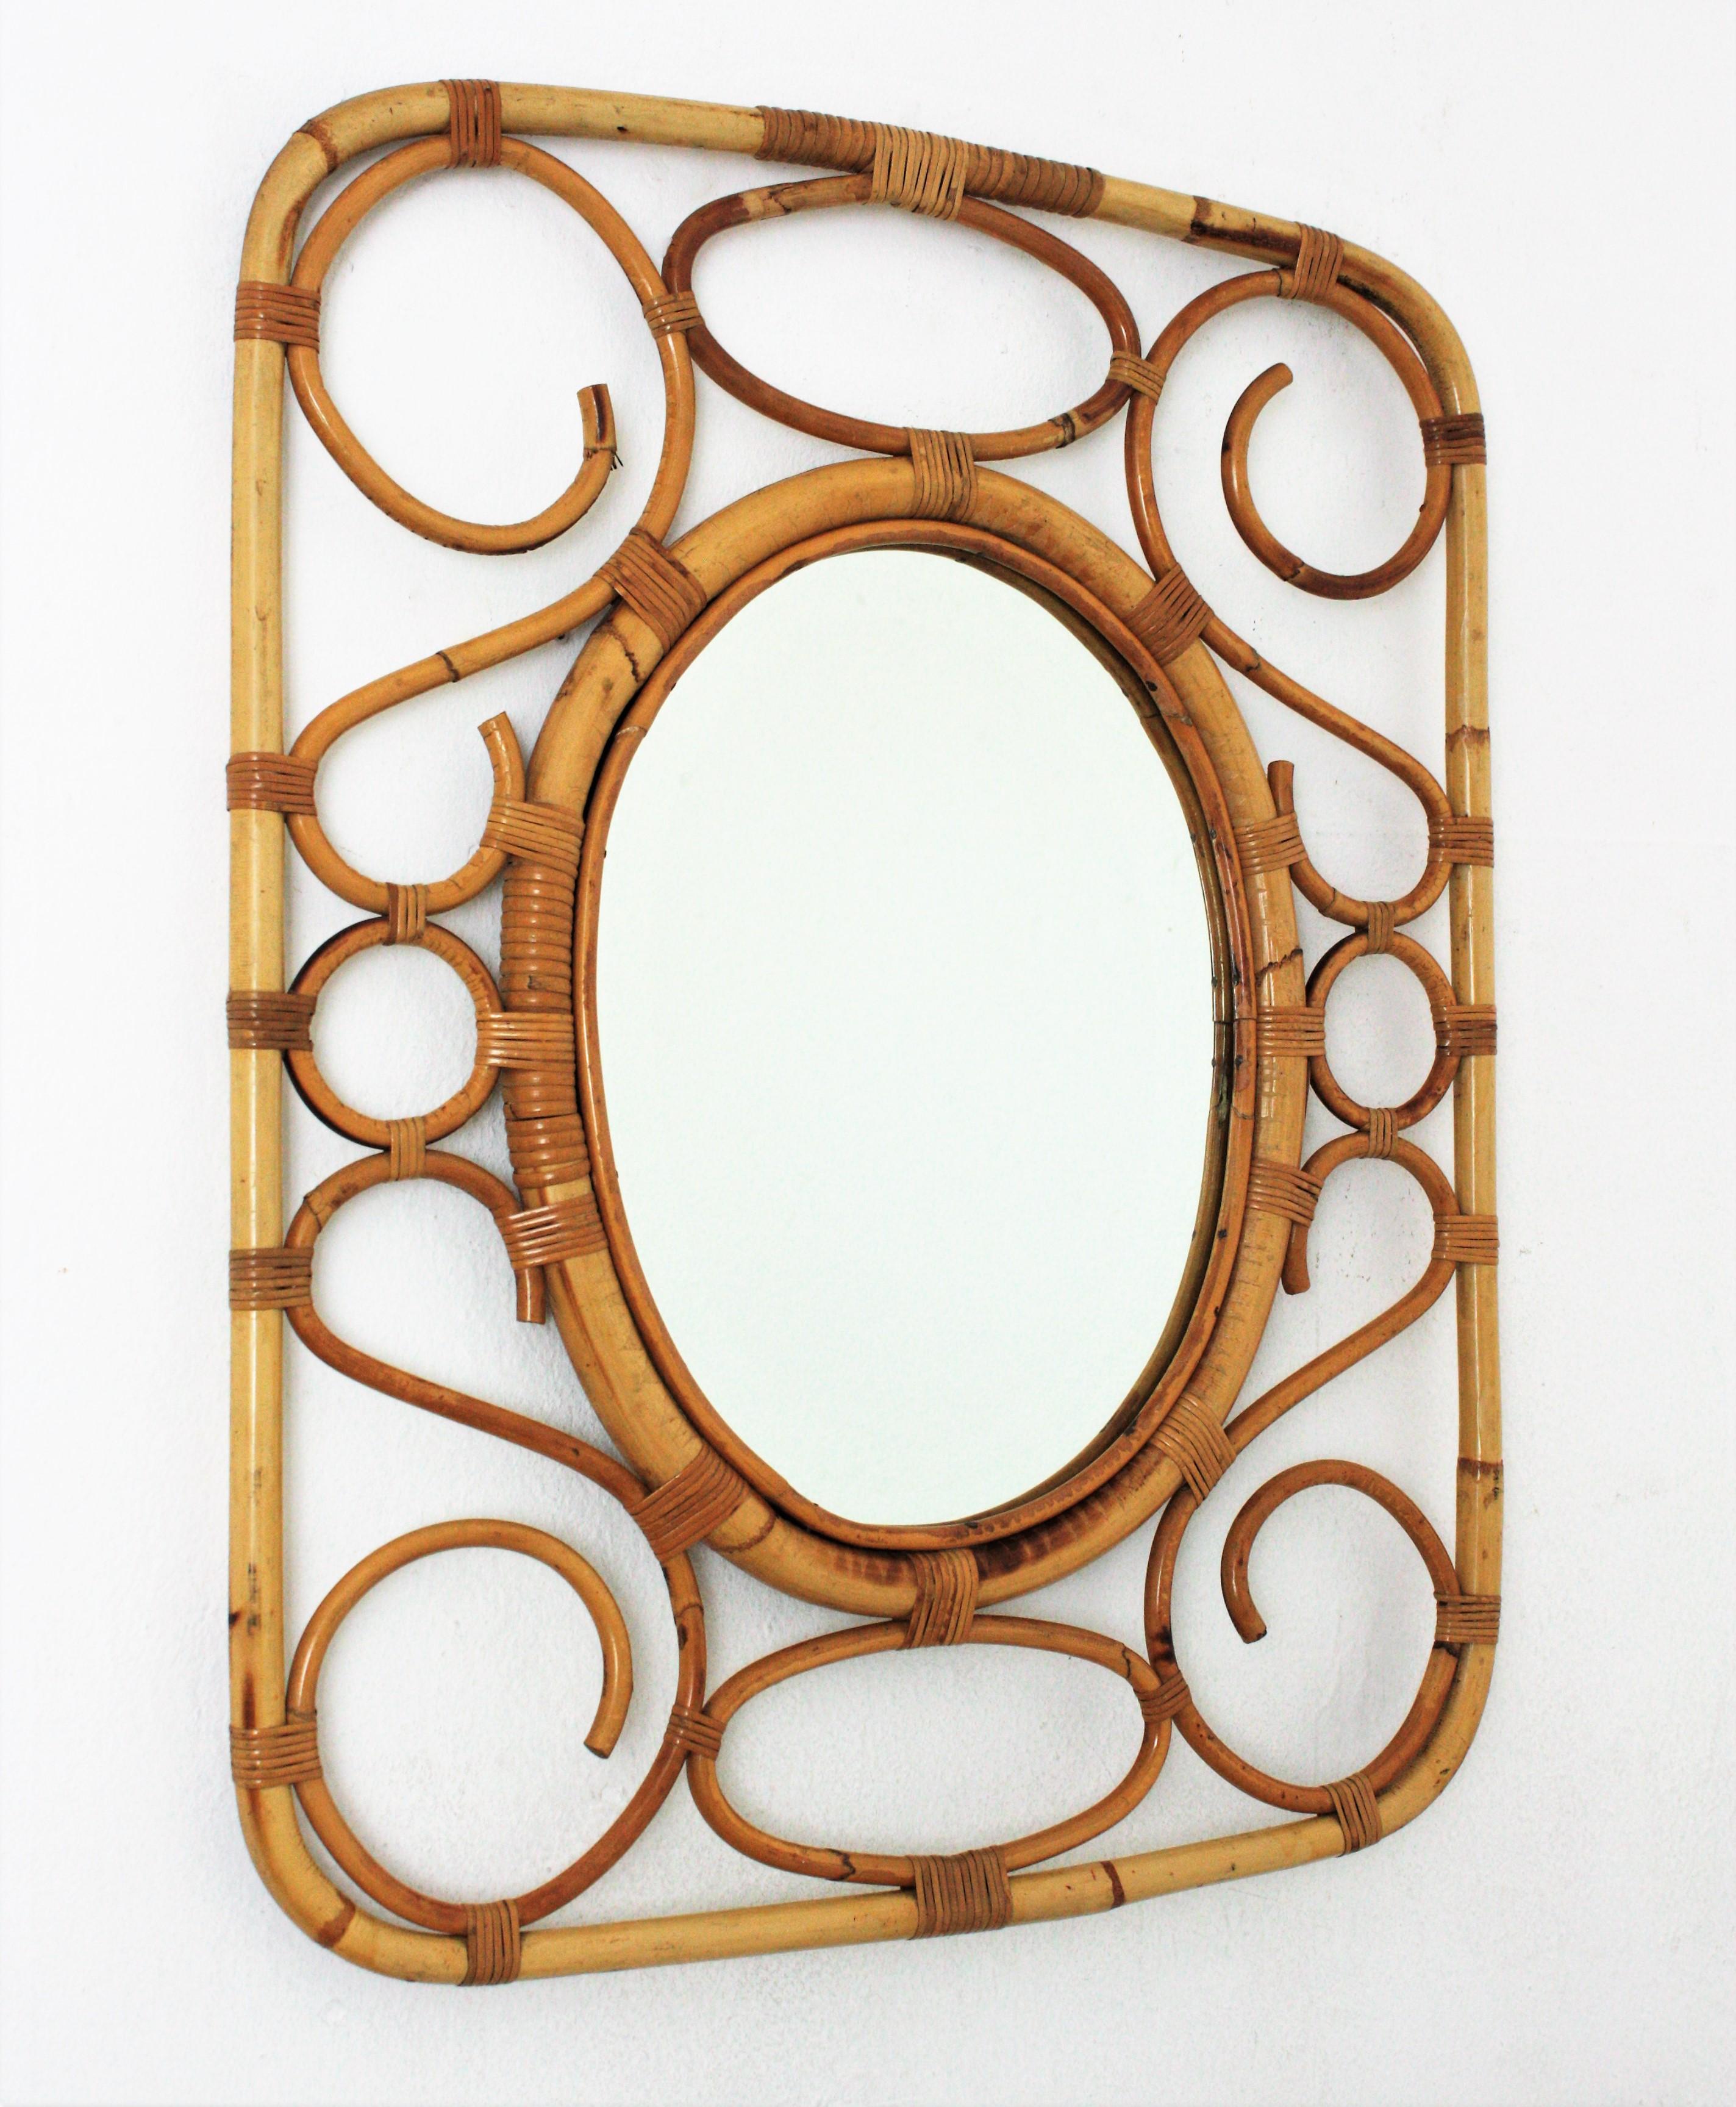 Mid-Century Modern Miroir rectangulaire en bambou et rotin, moderne du milieu du siècle dernier